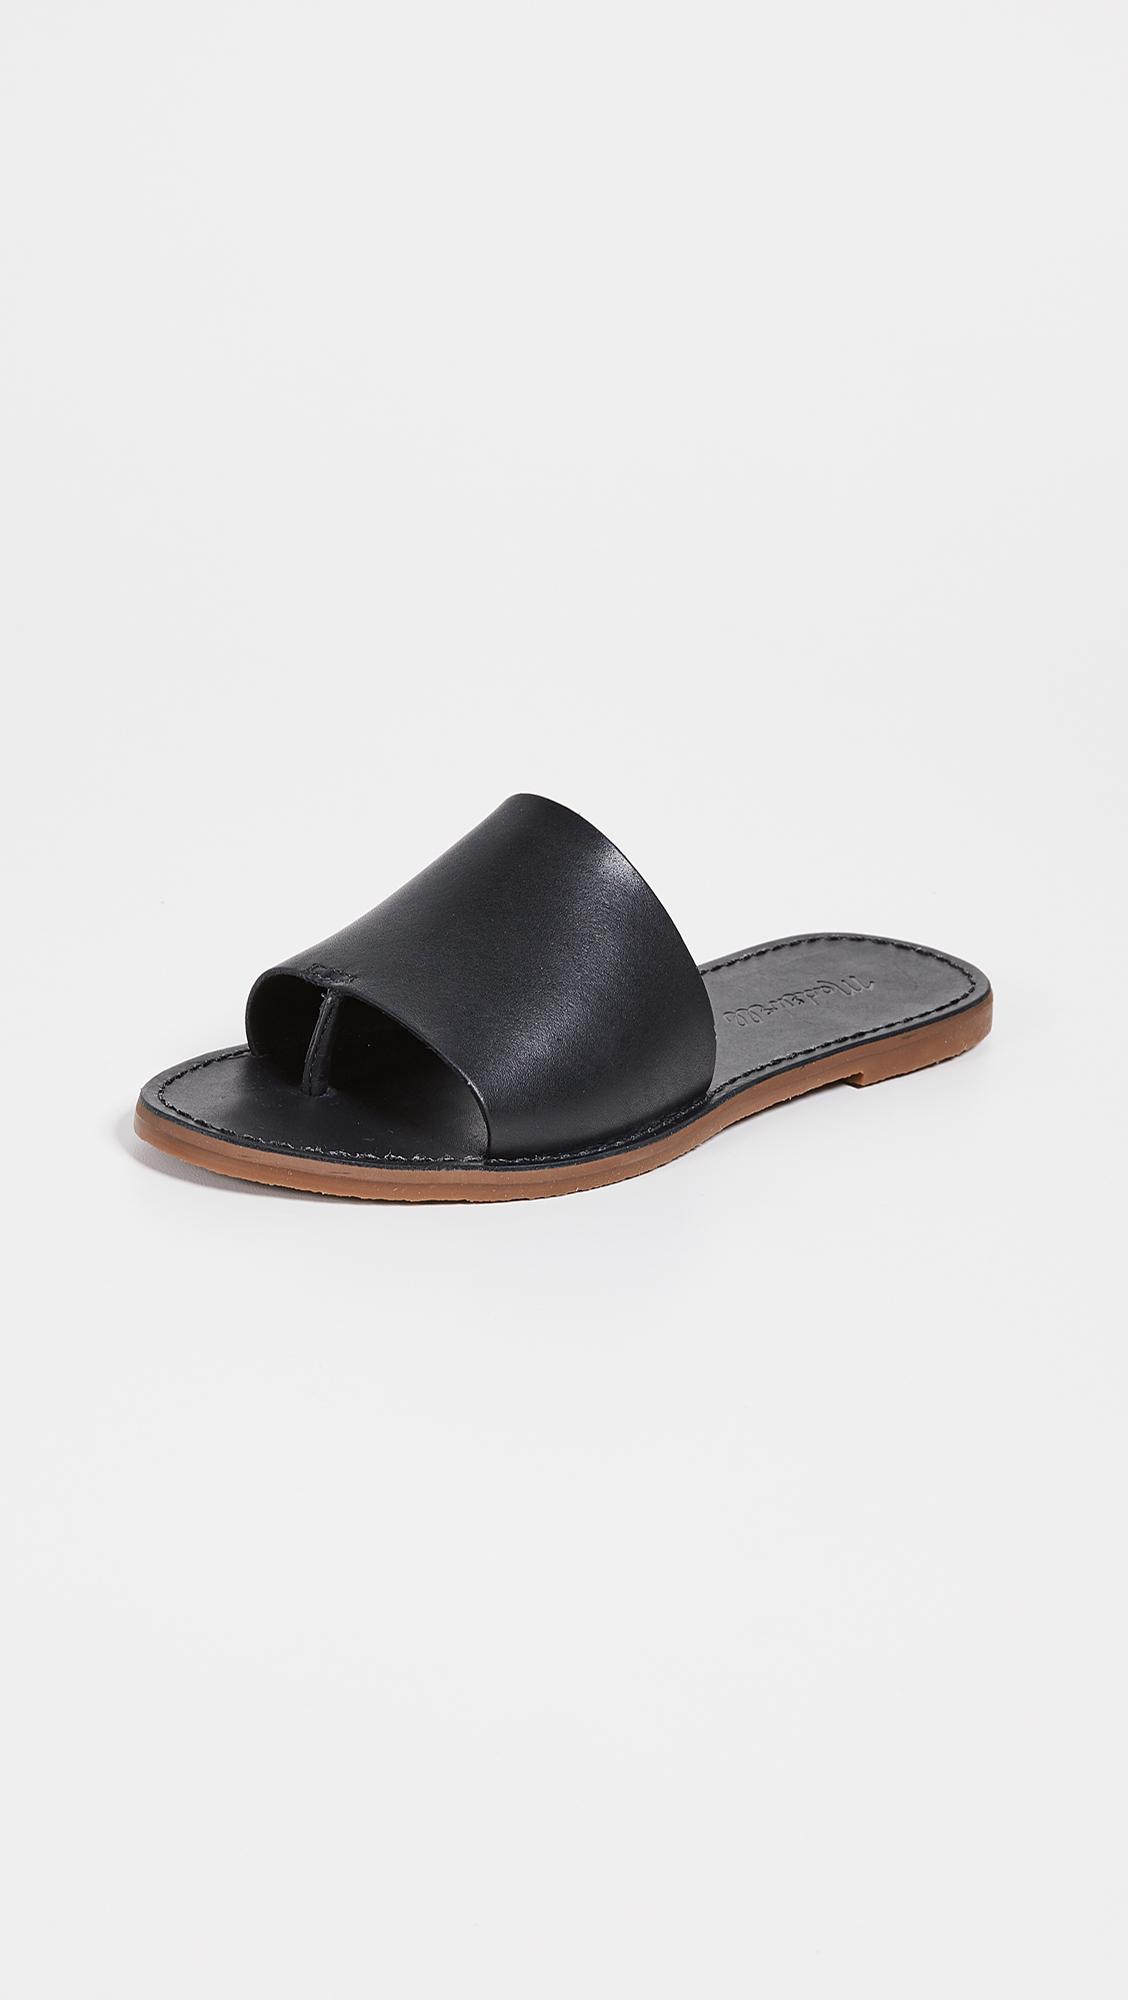 Madewell The Boardwalk Post Slide Sandals in Black | Lyst Canada